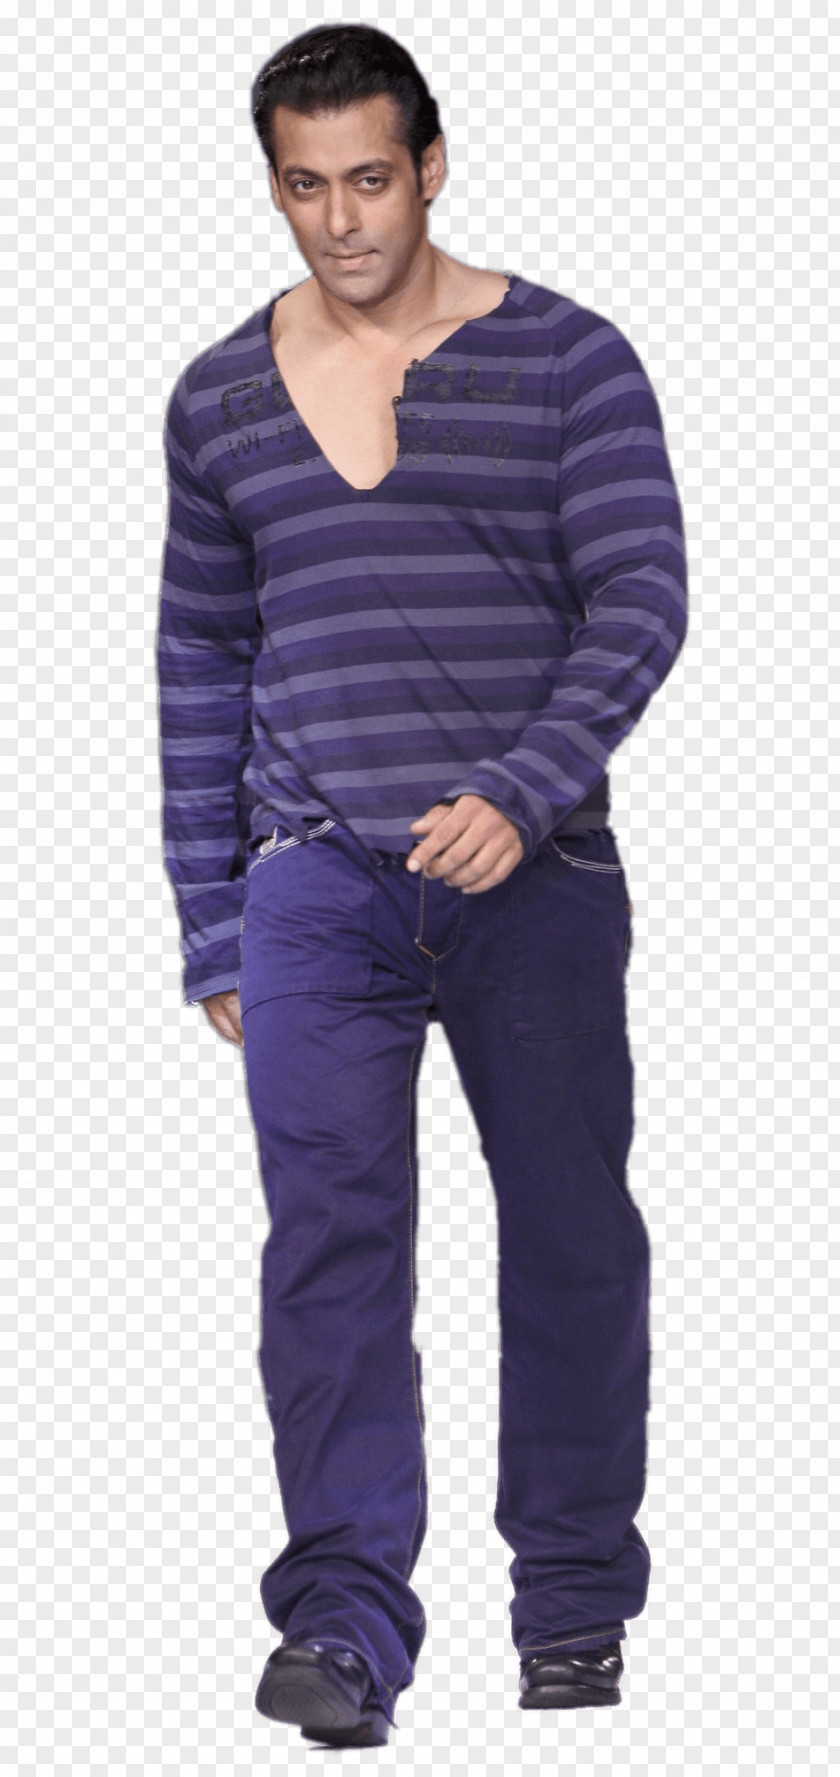 Salman Khan Full PNG Full, man walking wearing purple long-sleeved shirt clipart PNG